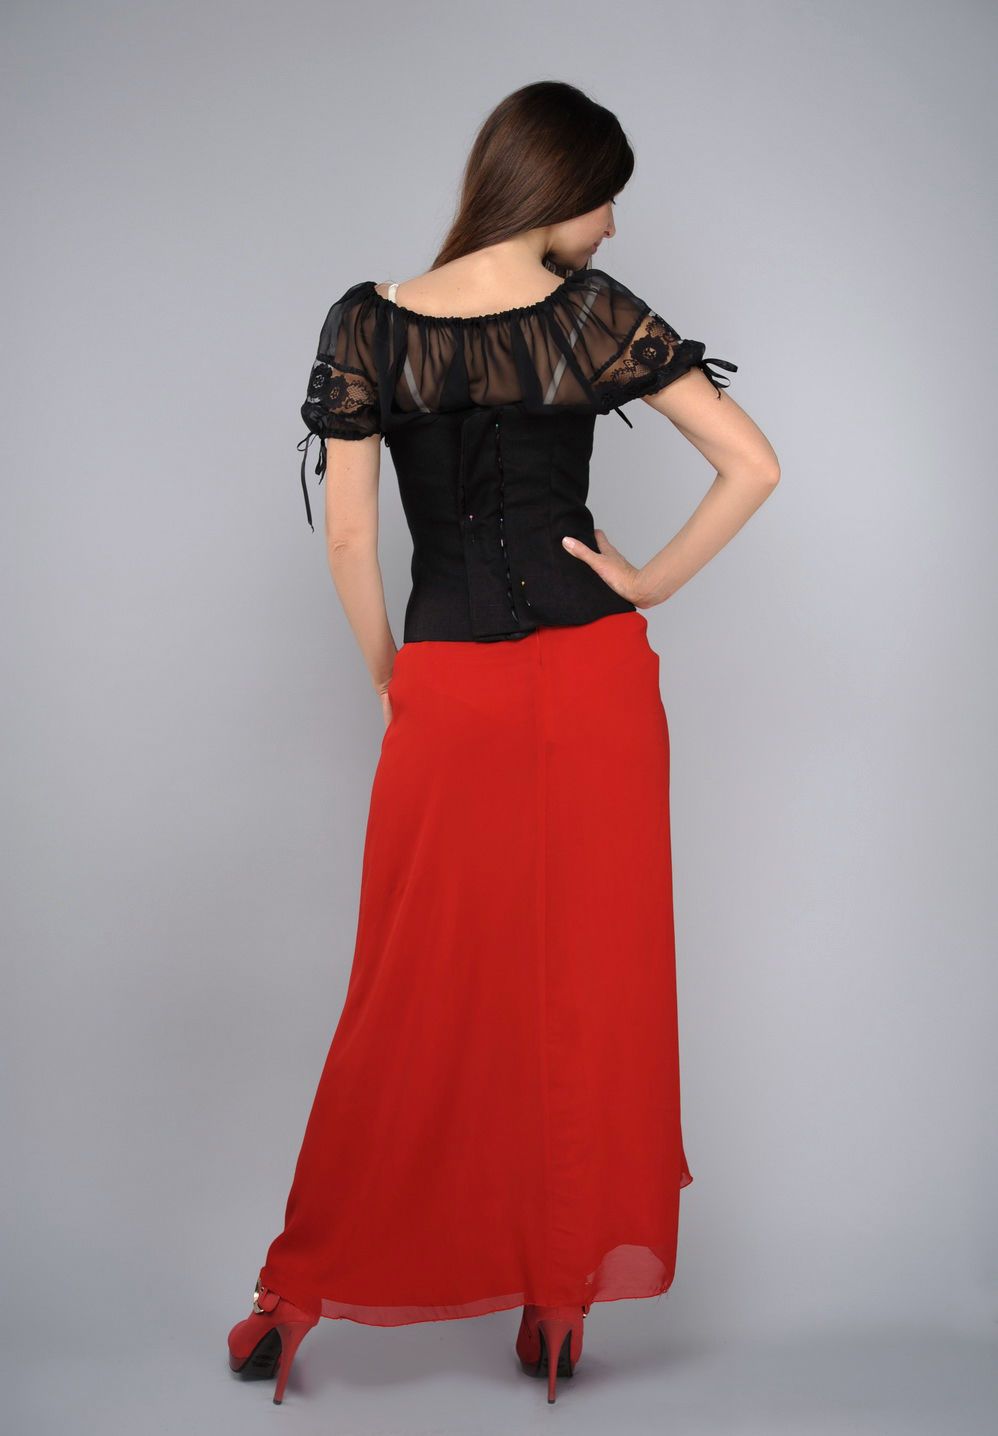 Ropa de mujer: falda, blusa, corset foto 3